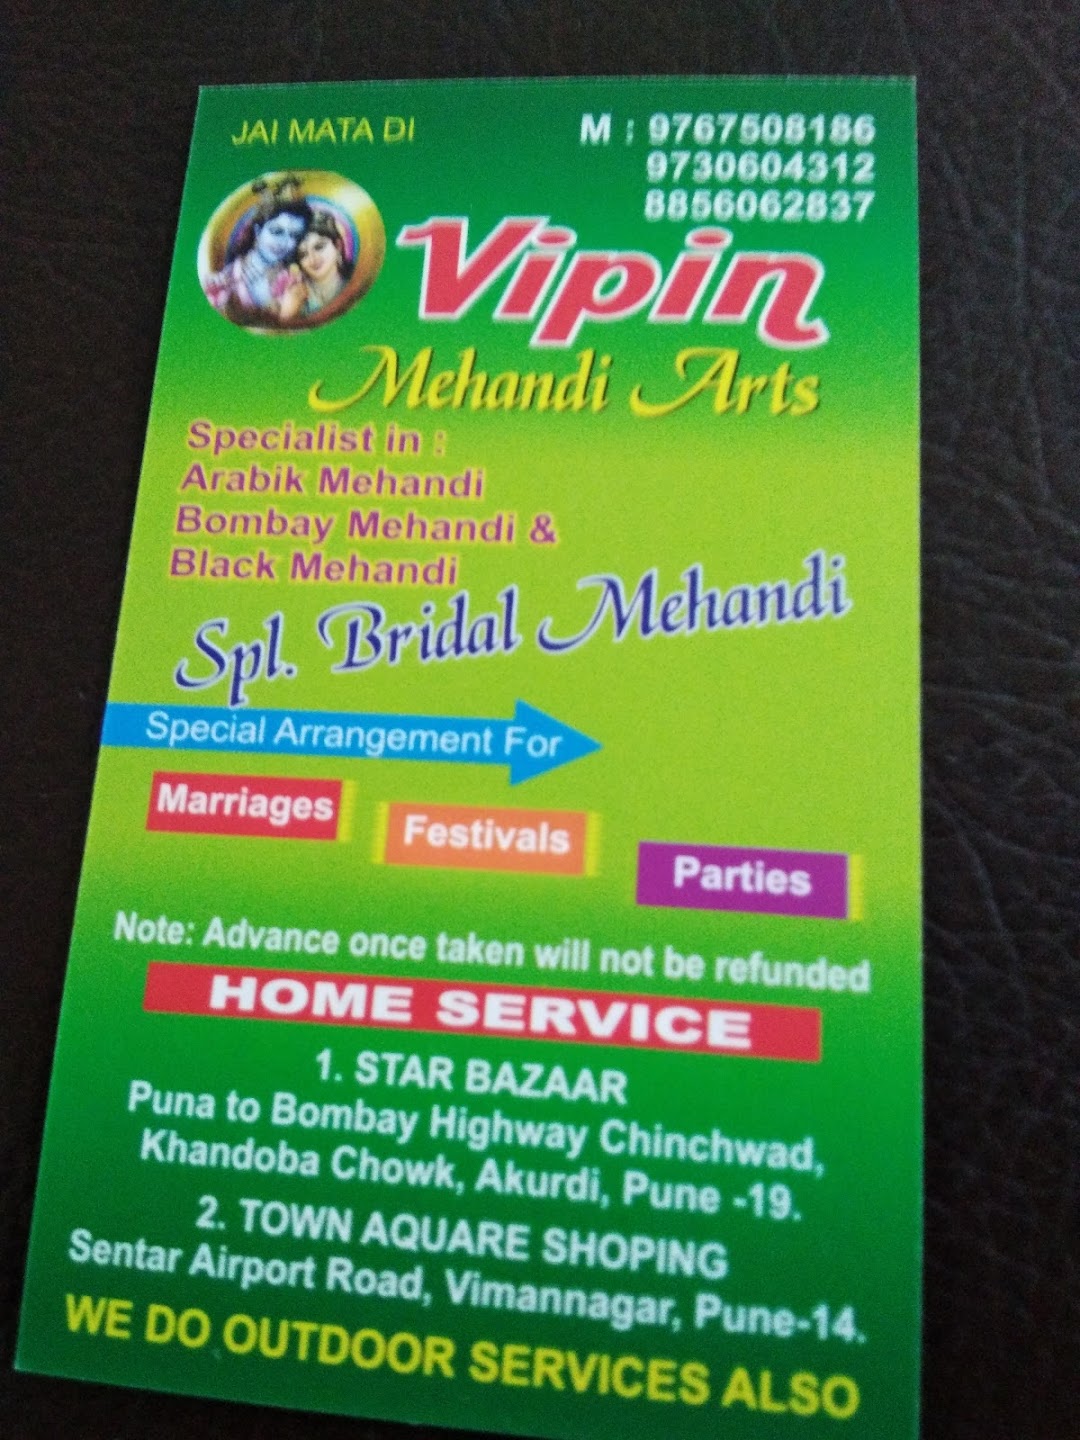 My VIPIN Mehandi Arts